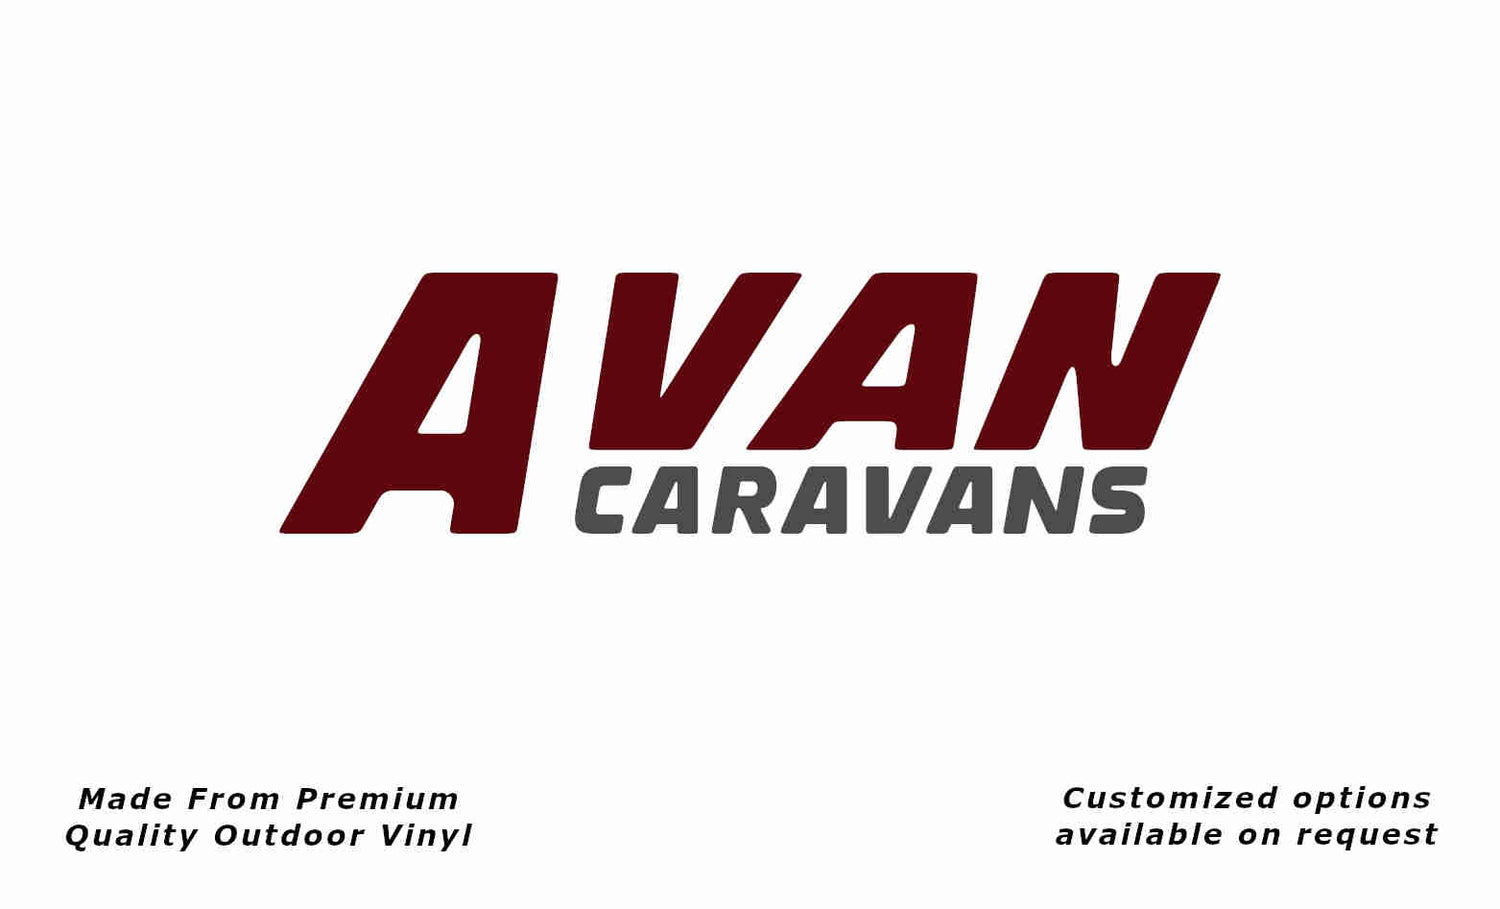 Avan caravans replacement vinyl decal sticker in purple red and dark grey.